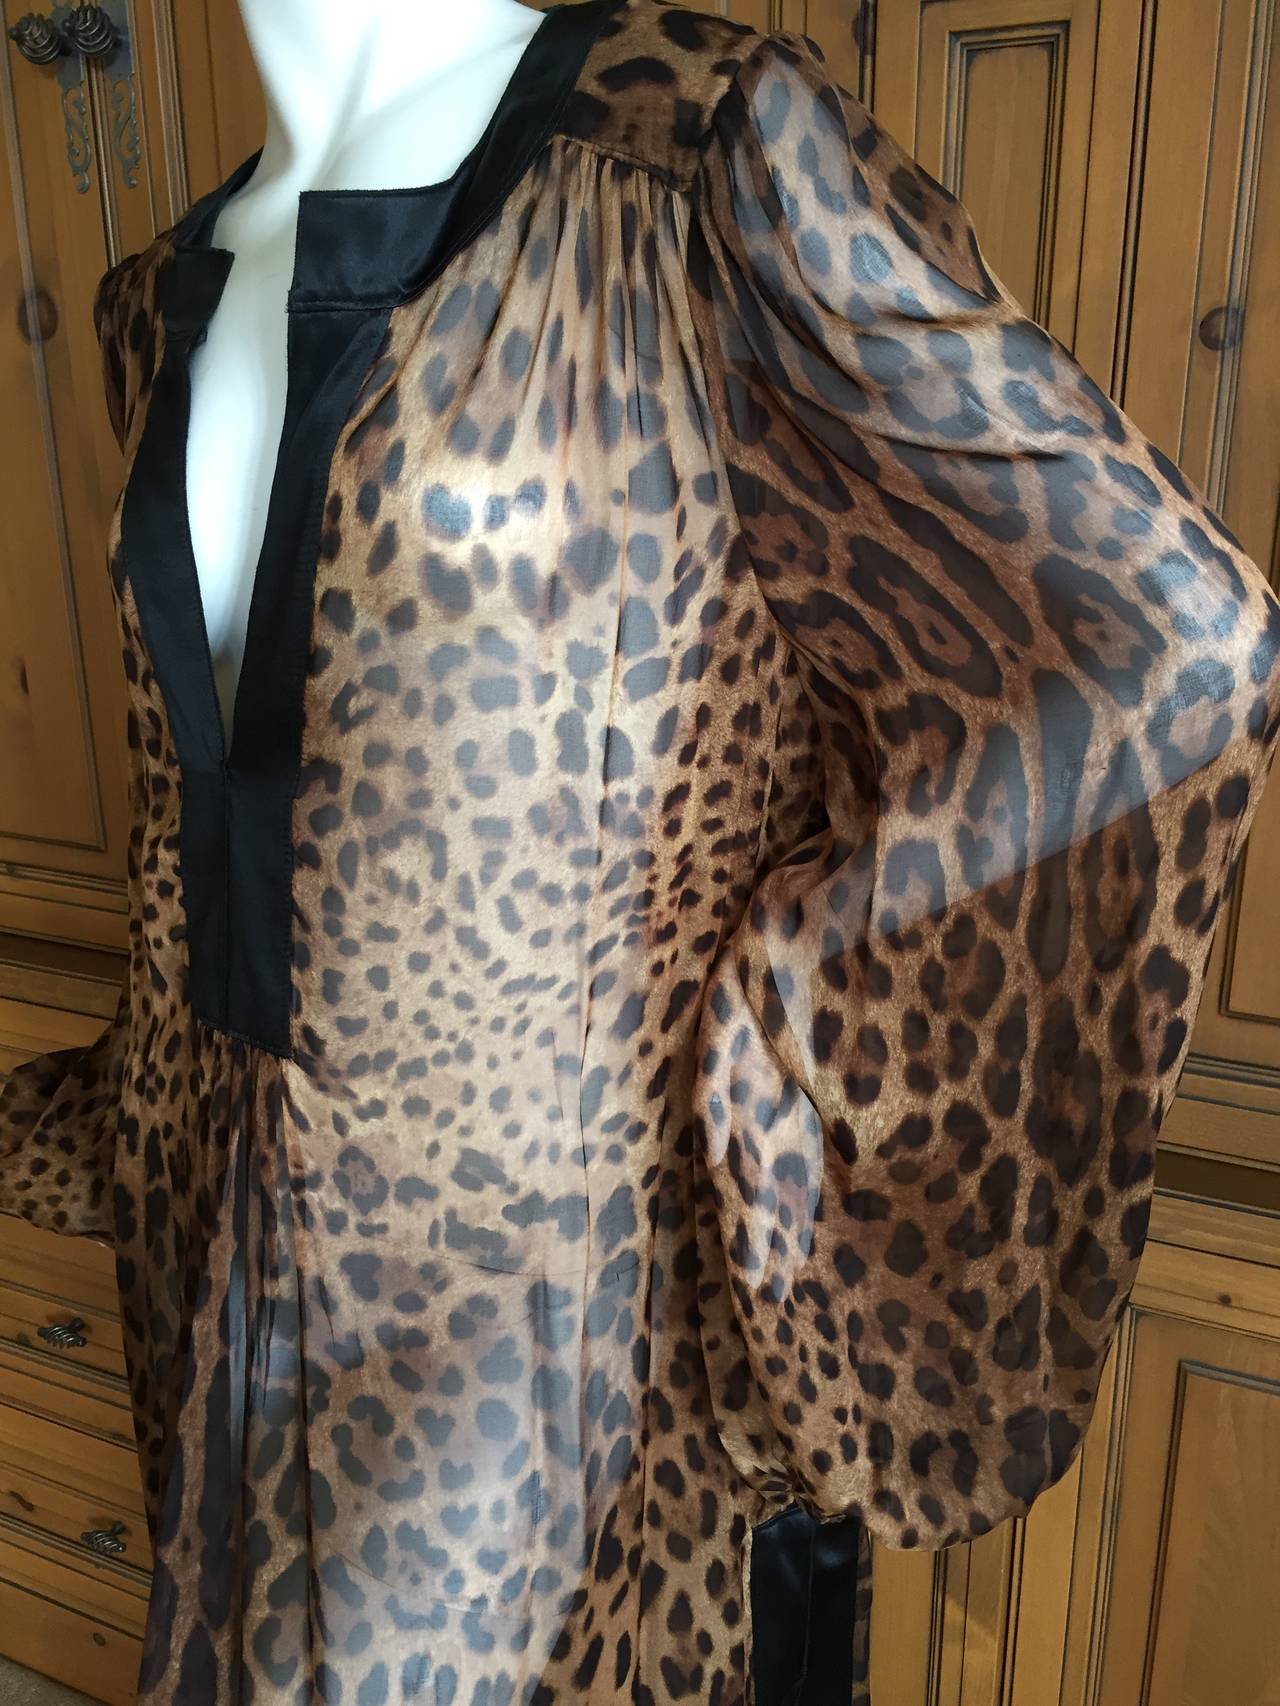 Dolce & Gabbana Silk Leopard Print Bell Sleeve Caftan.
Sheer silk chiffon, edged in black.
Size Large